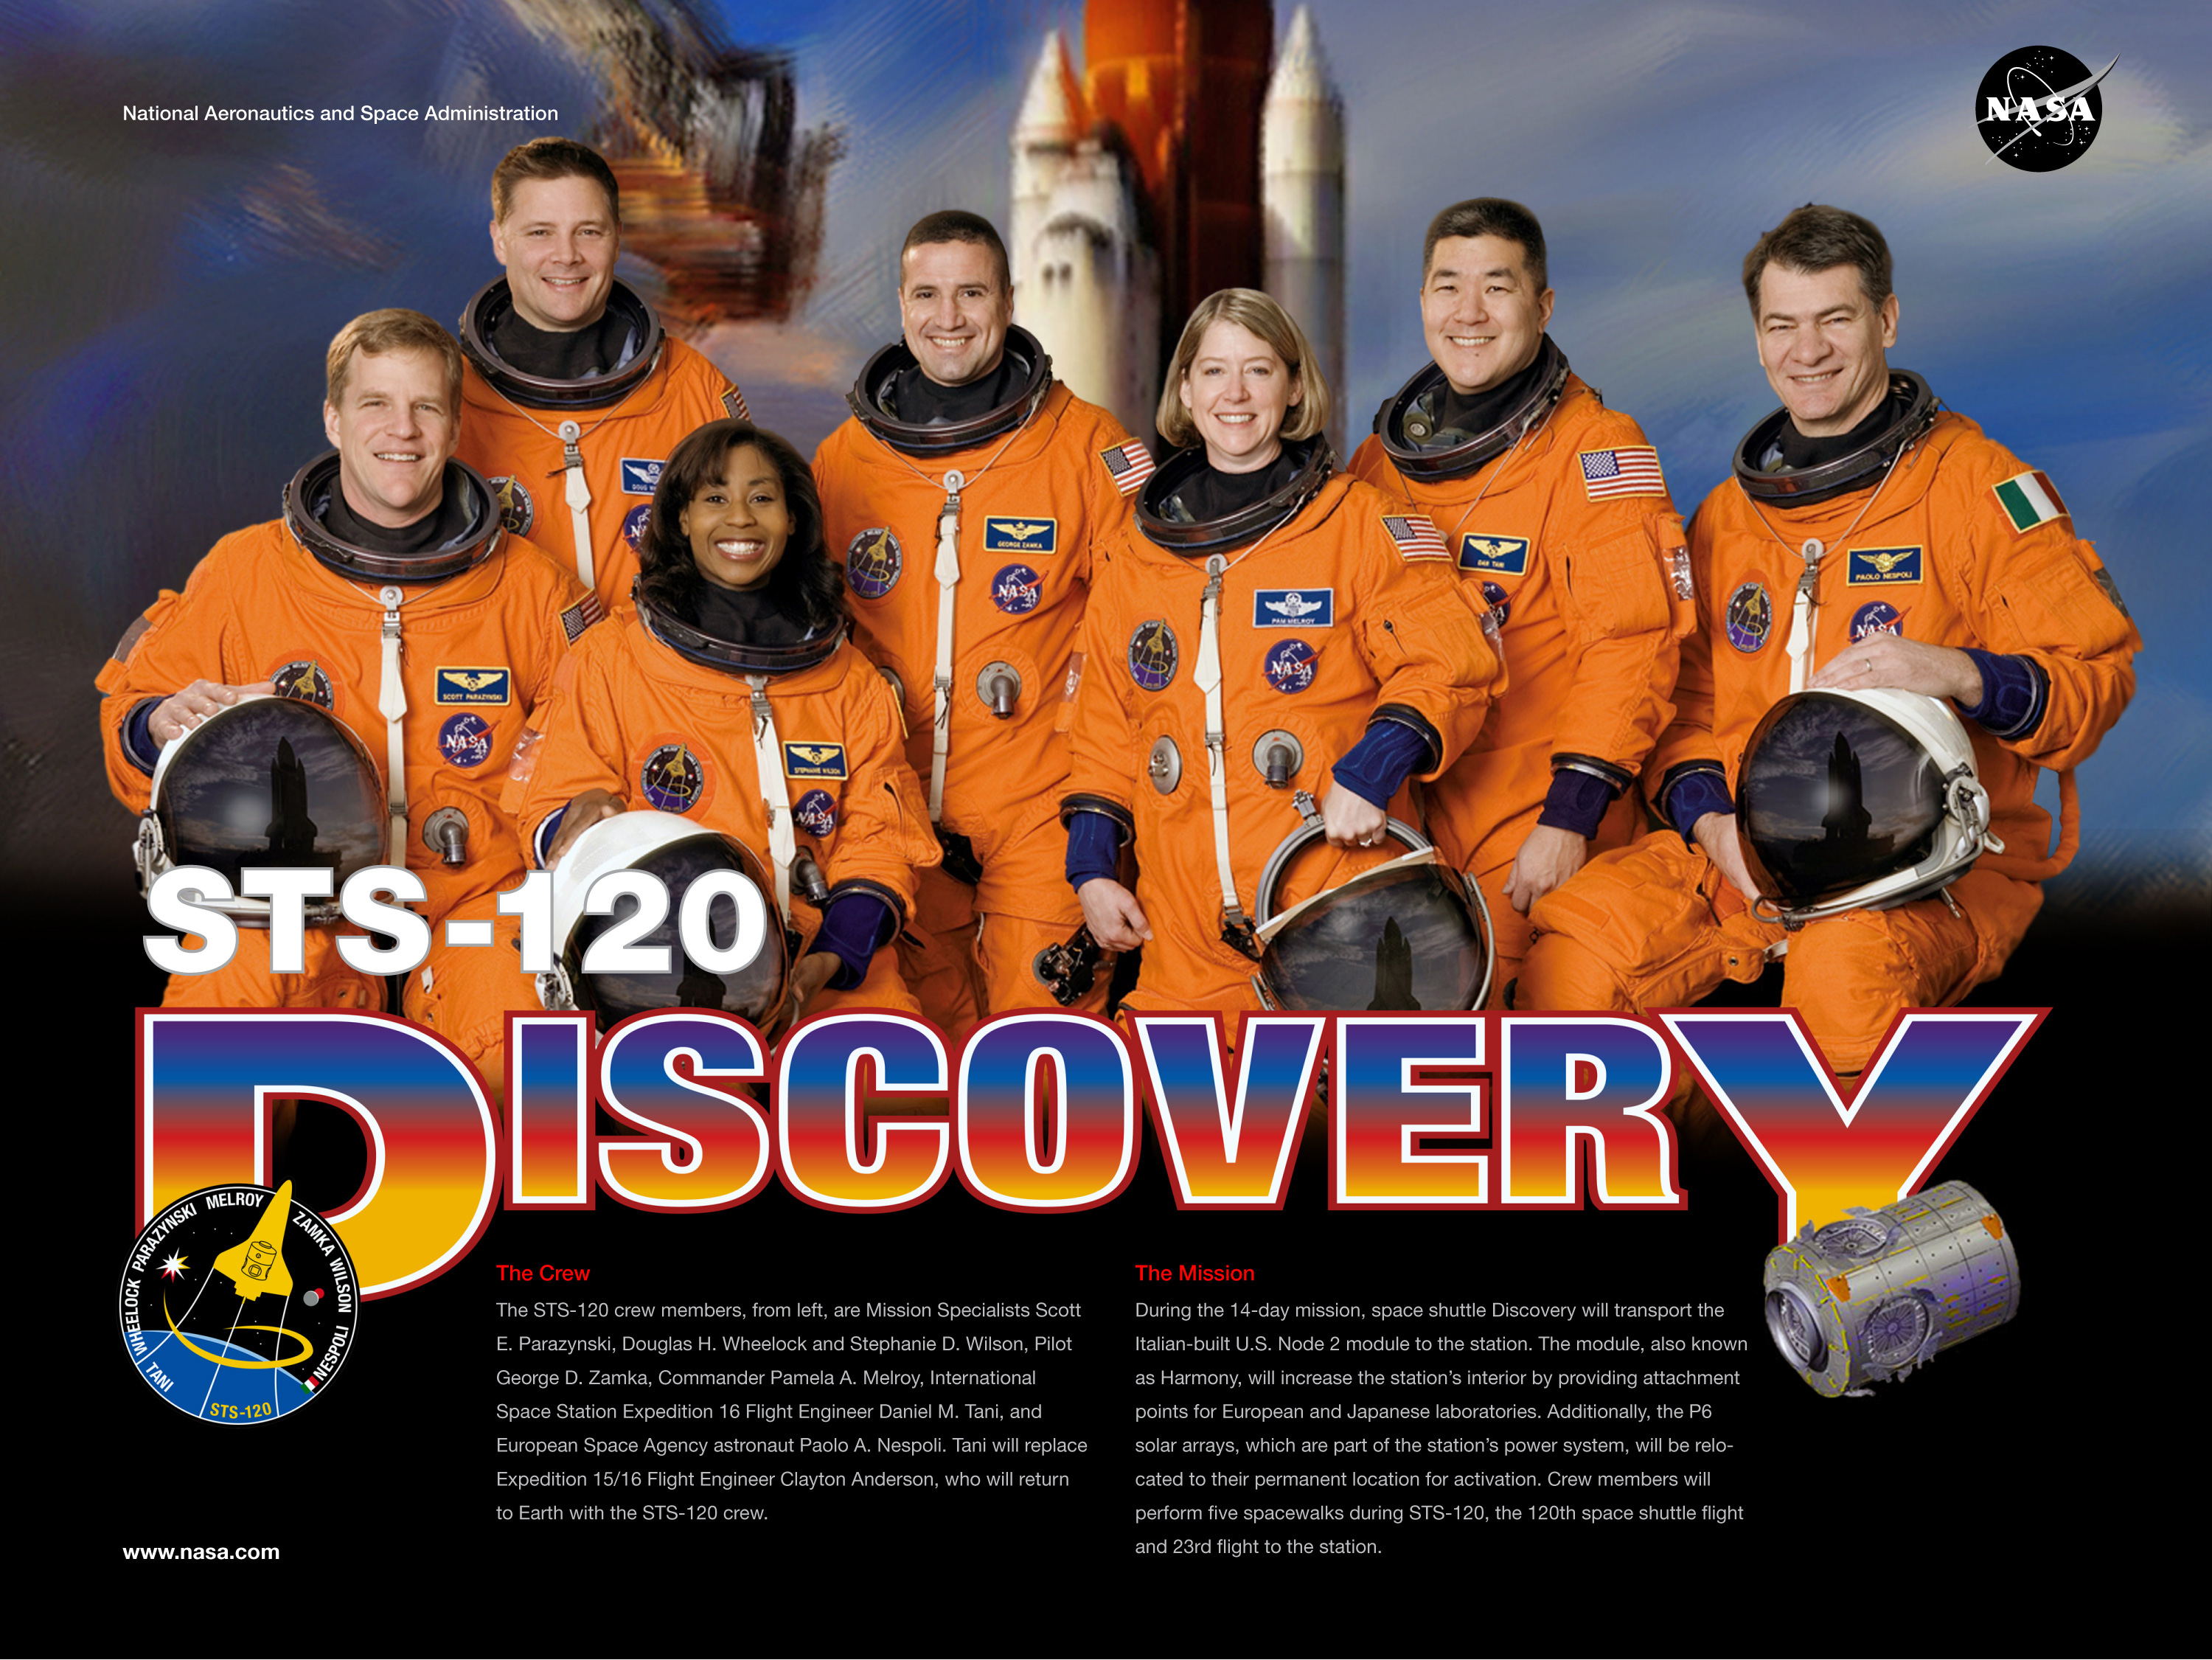 The STS-120 Crew. Image credit NASA